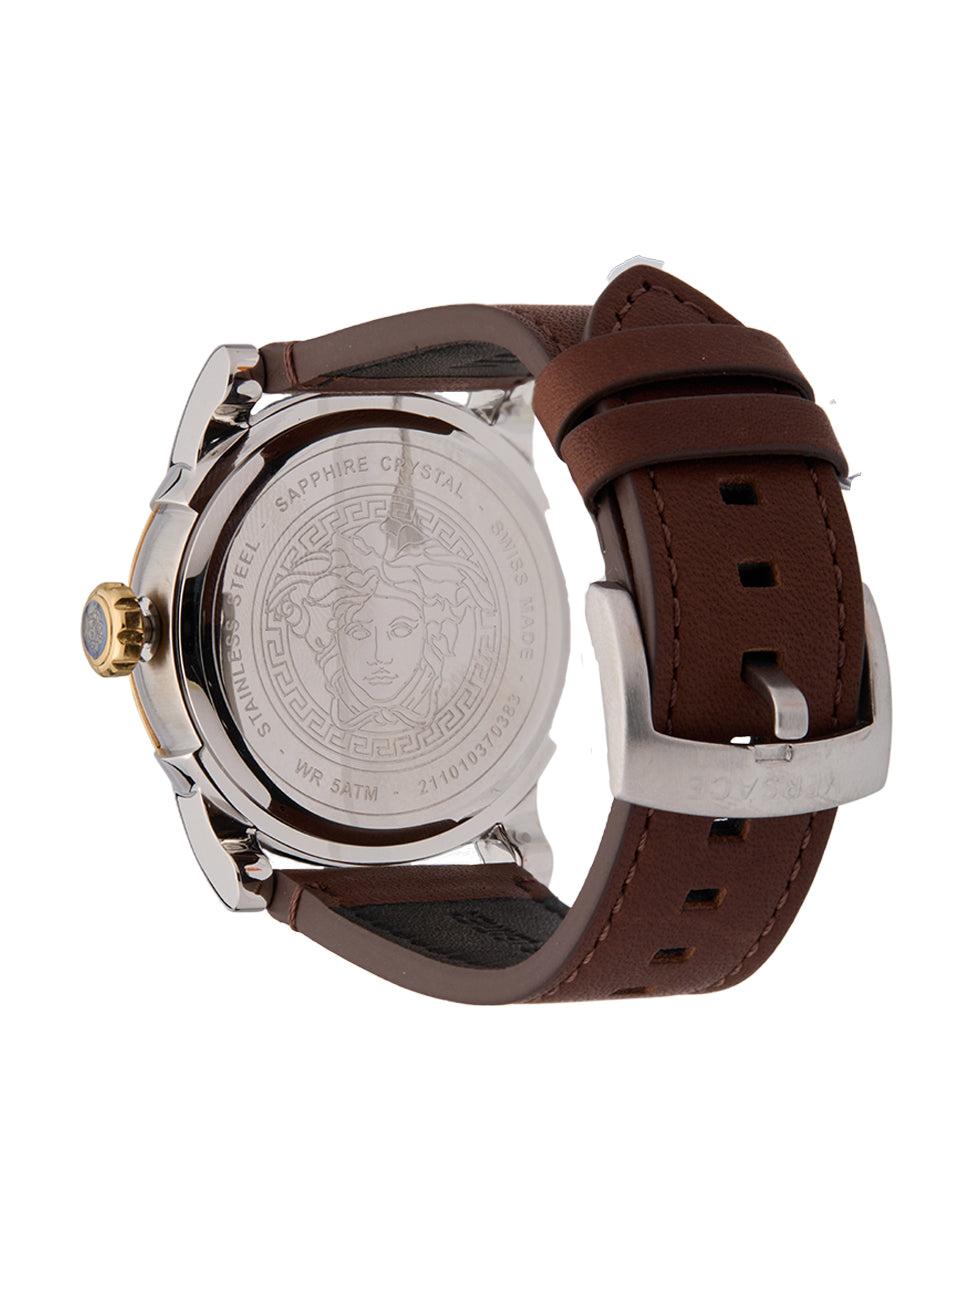 Versace Men's GMT Vintage Watch Brown/Brown 42mm VEV300219